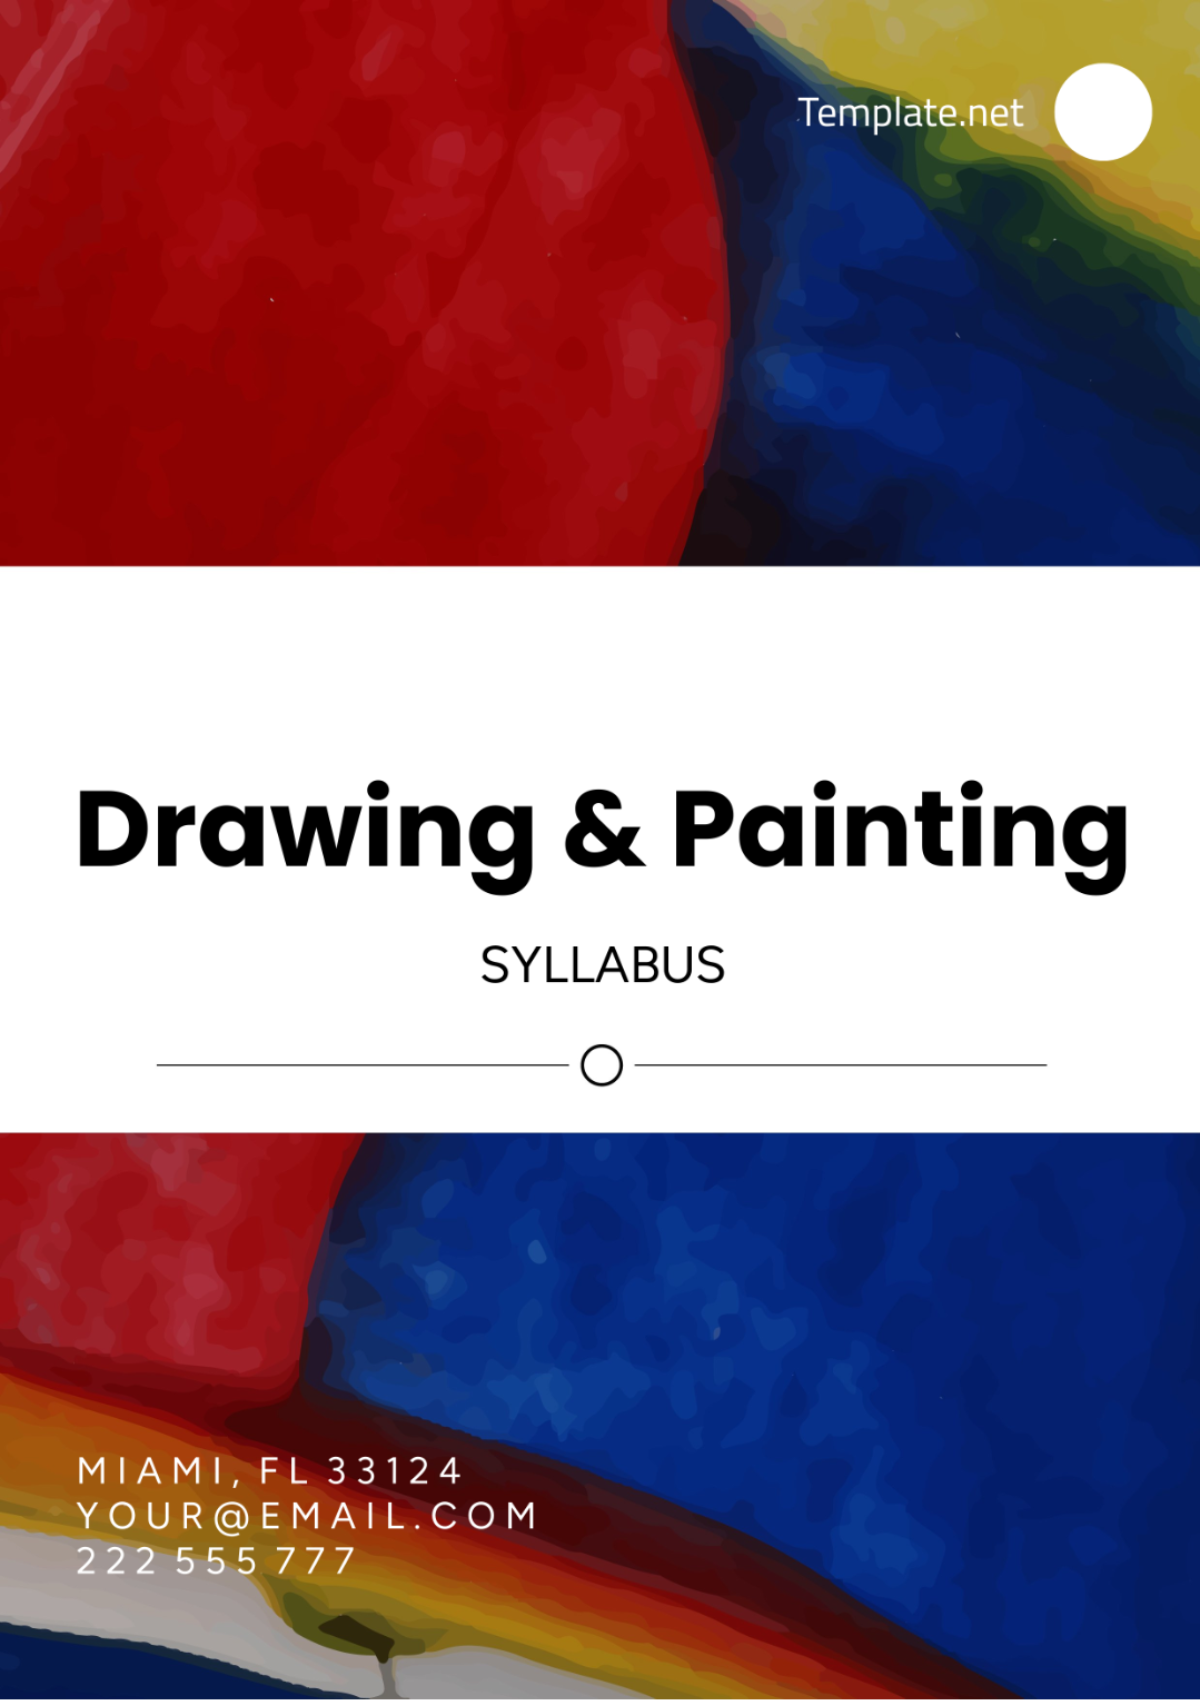 Drawing & Painting Syllabus Template